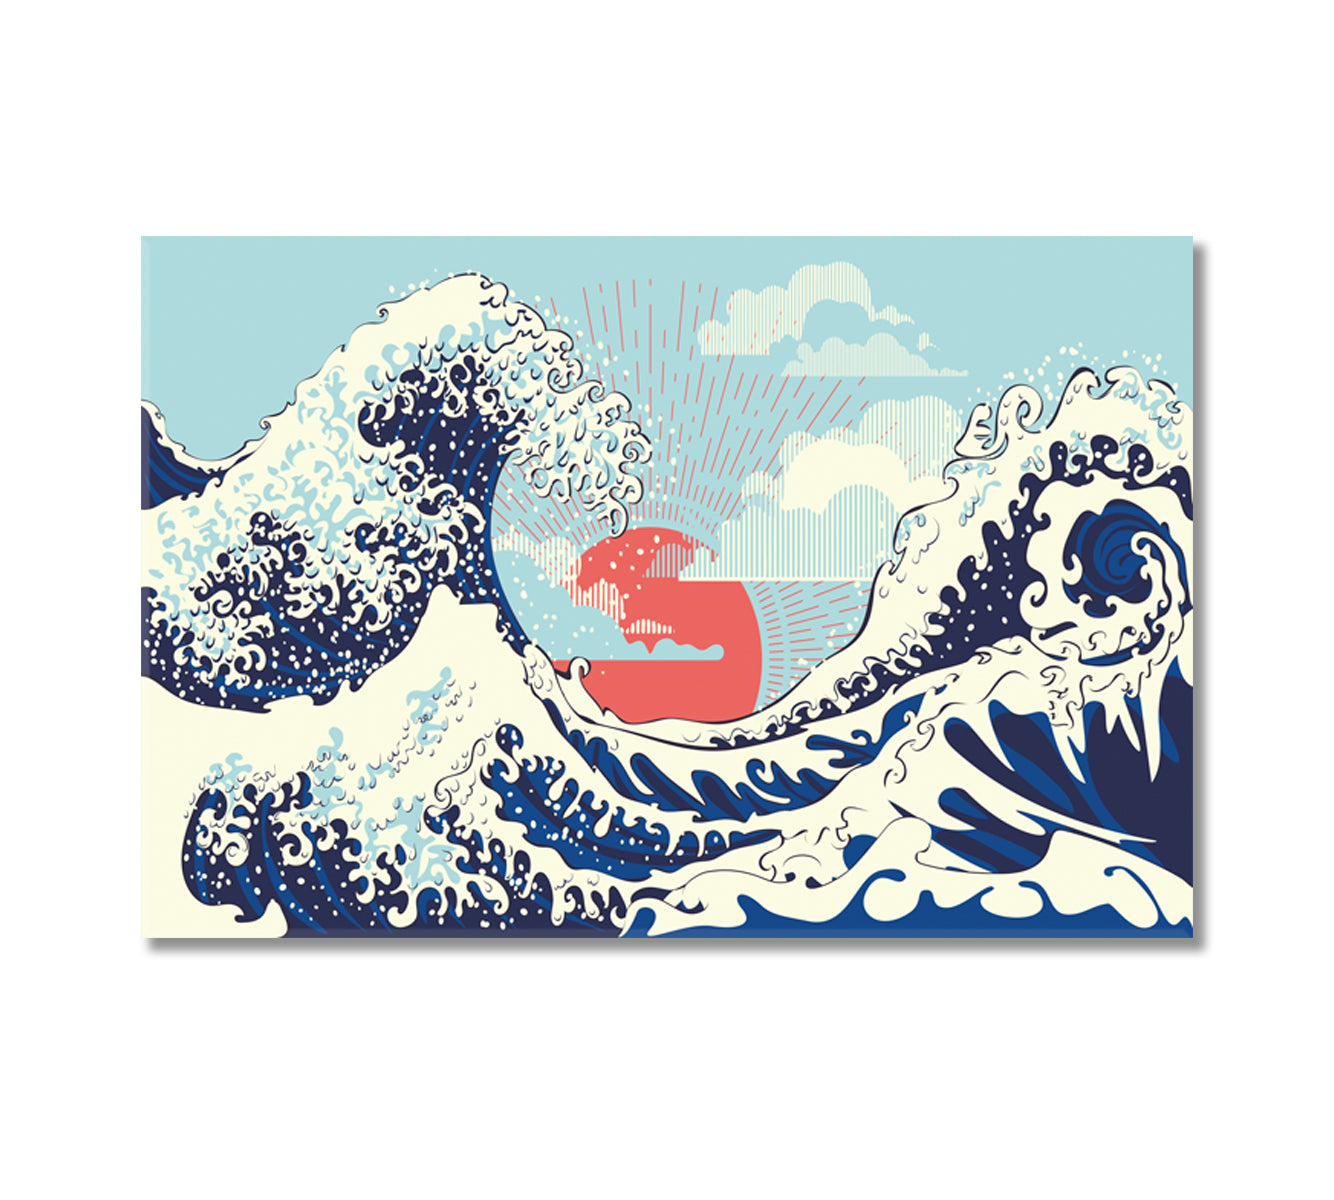 Sea Waves Sunset Vintage Art Canvas-Canvas Print-CetArt-1 Panel-24x16 inches-CetArt